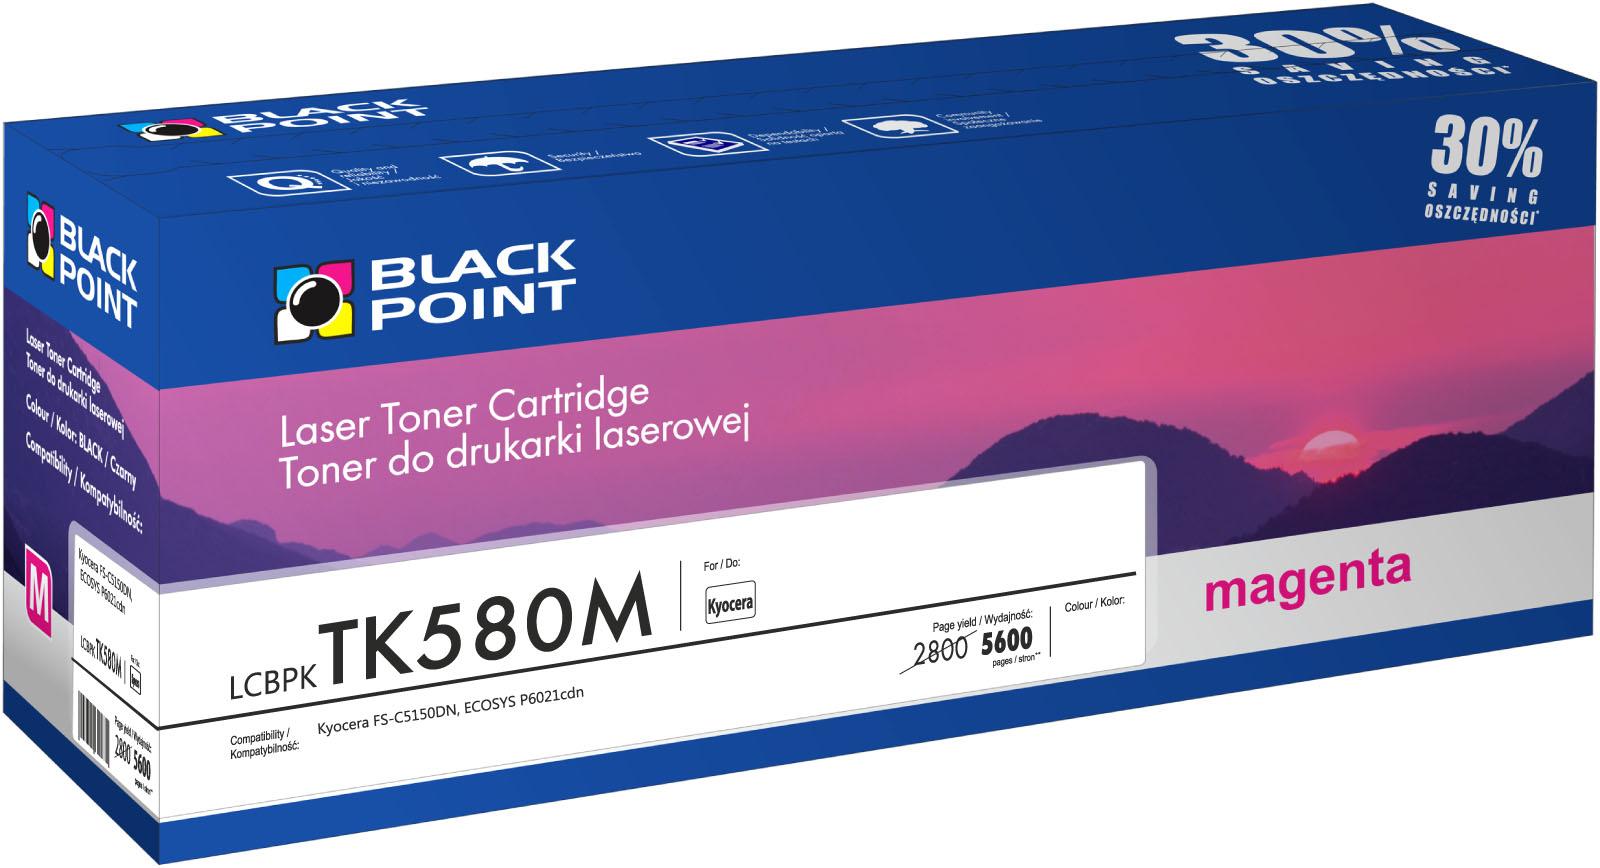 CMYK - Black Point toner LCBPKTK580M zastpuje Kyocera TK-580M, czerwony